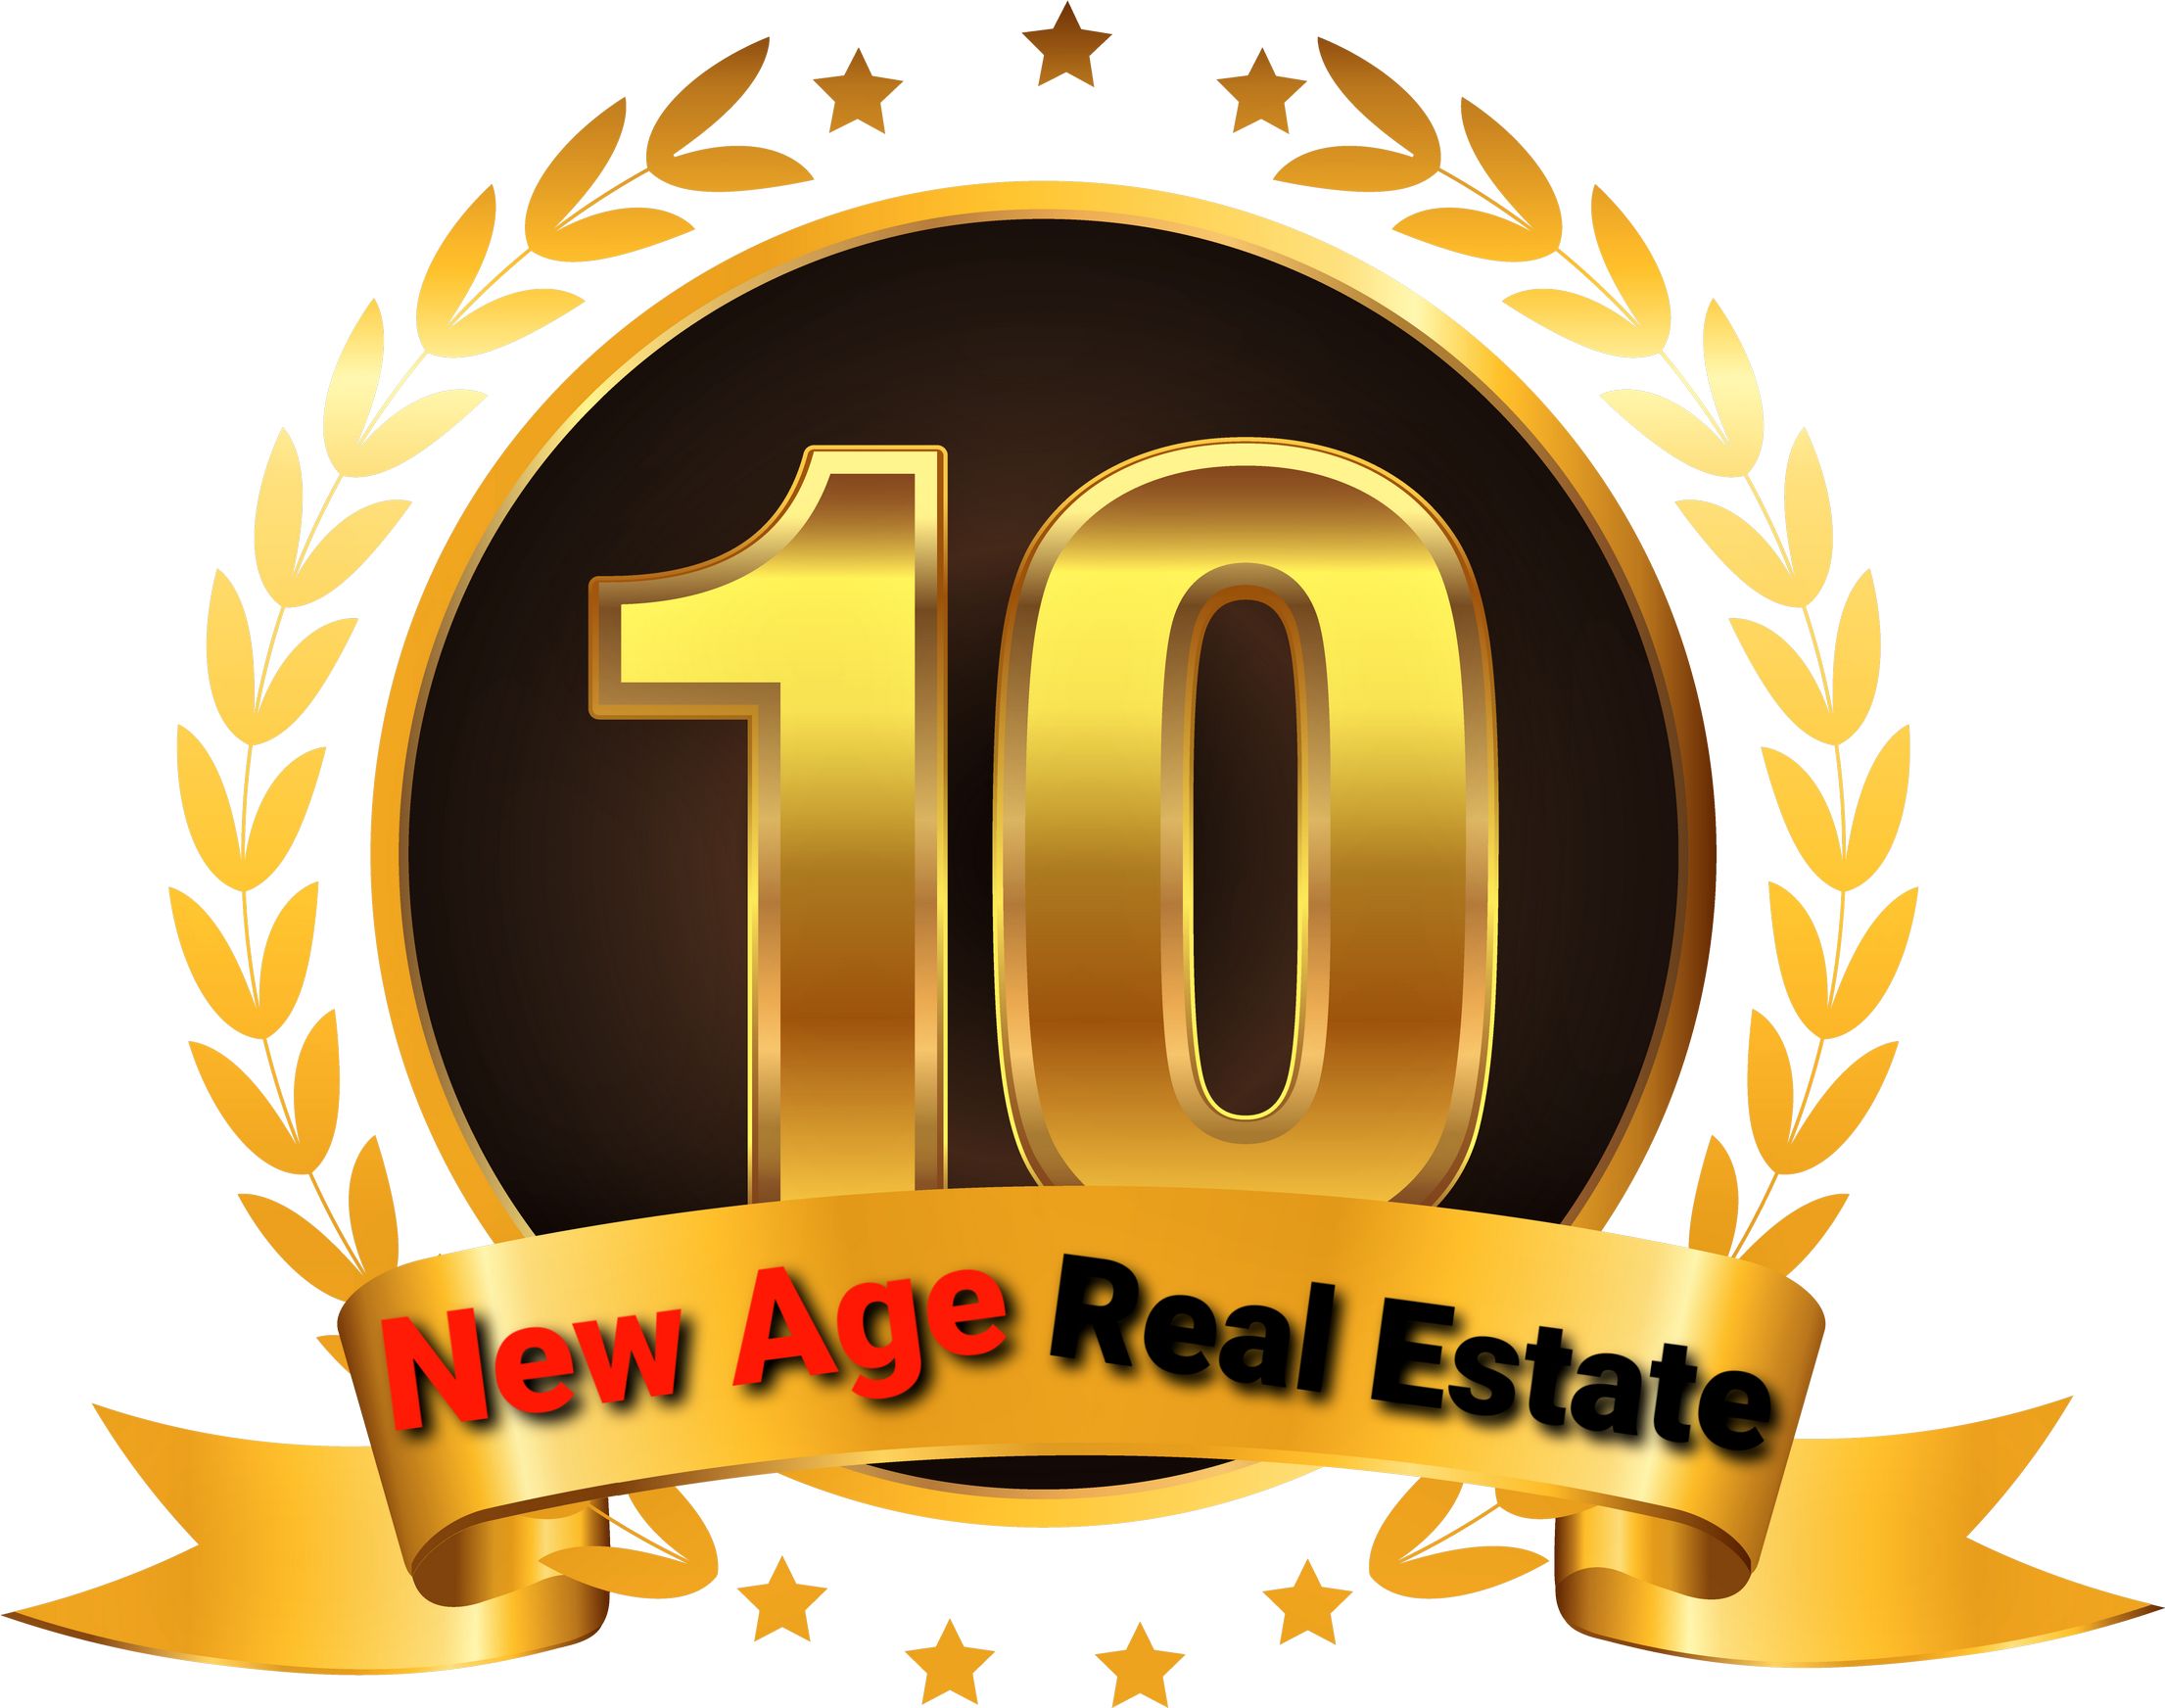 21/02/21  Happy anniversary New Age Real Estate!